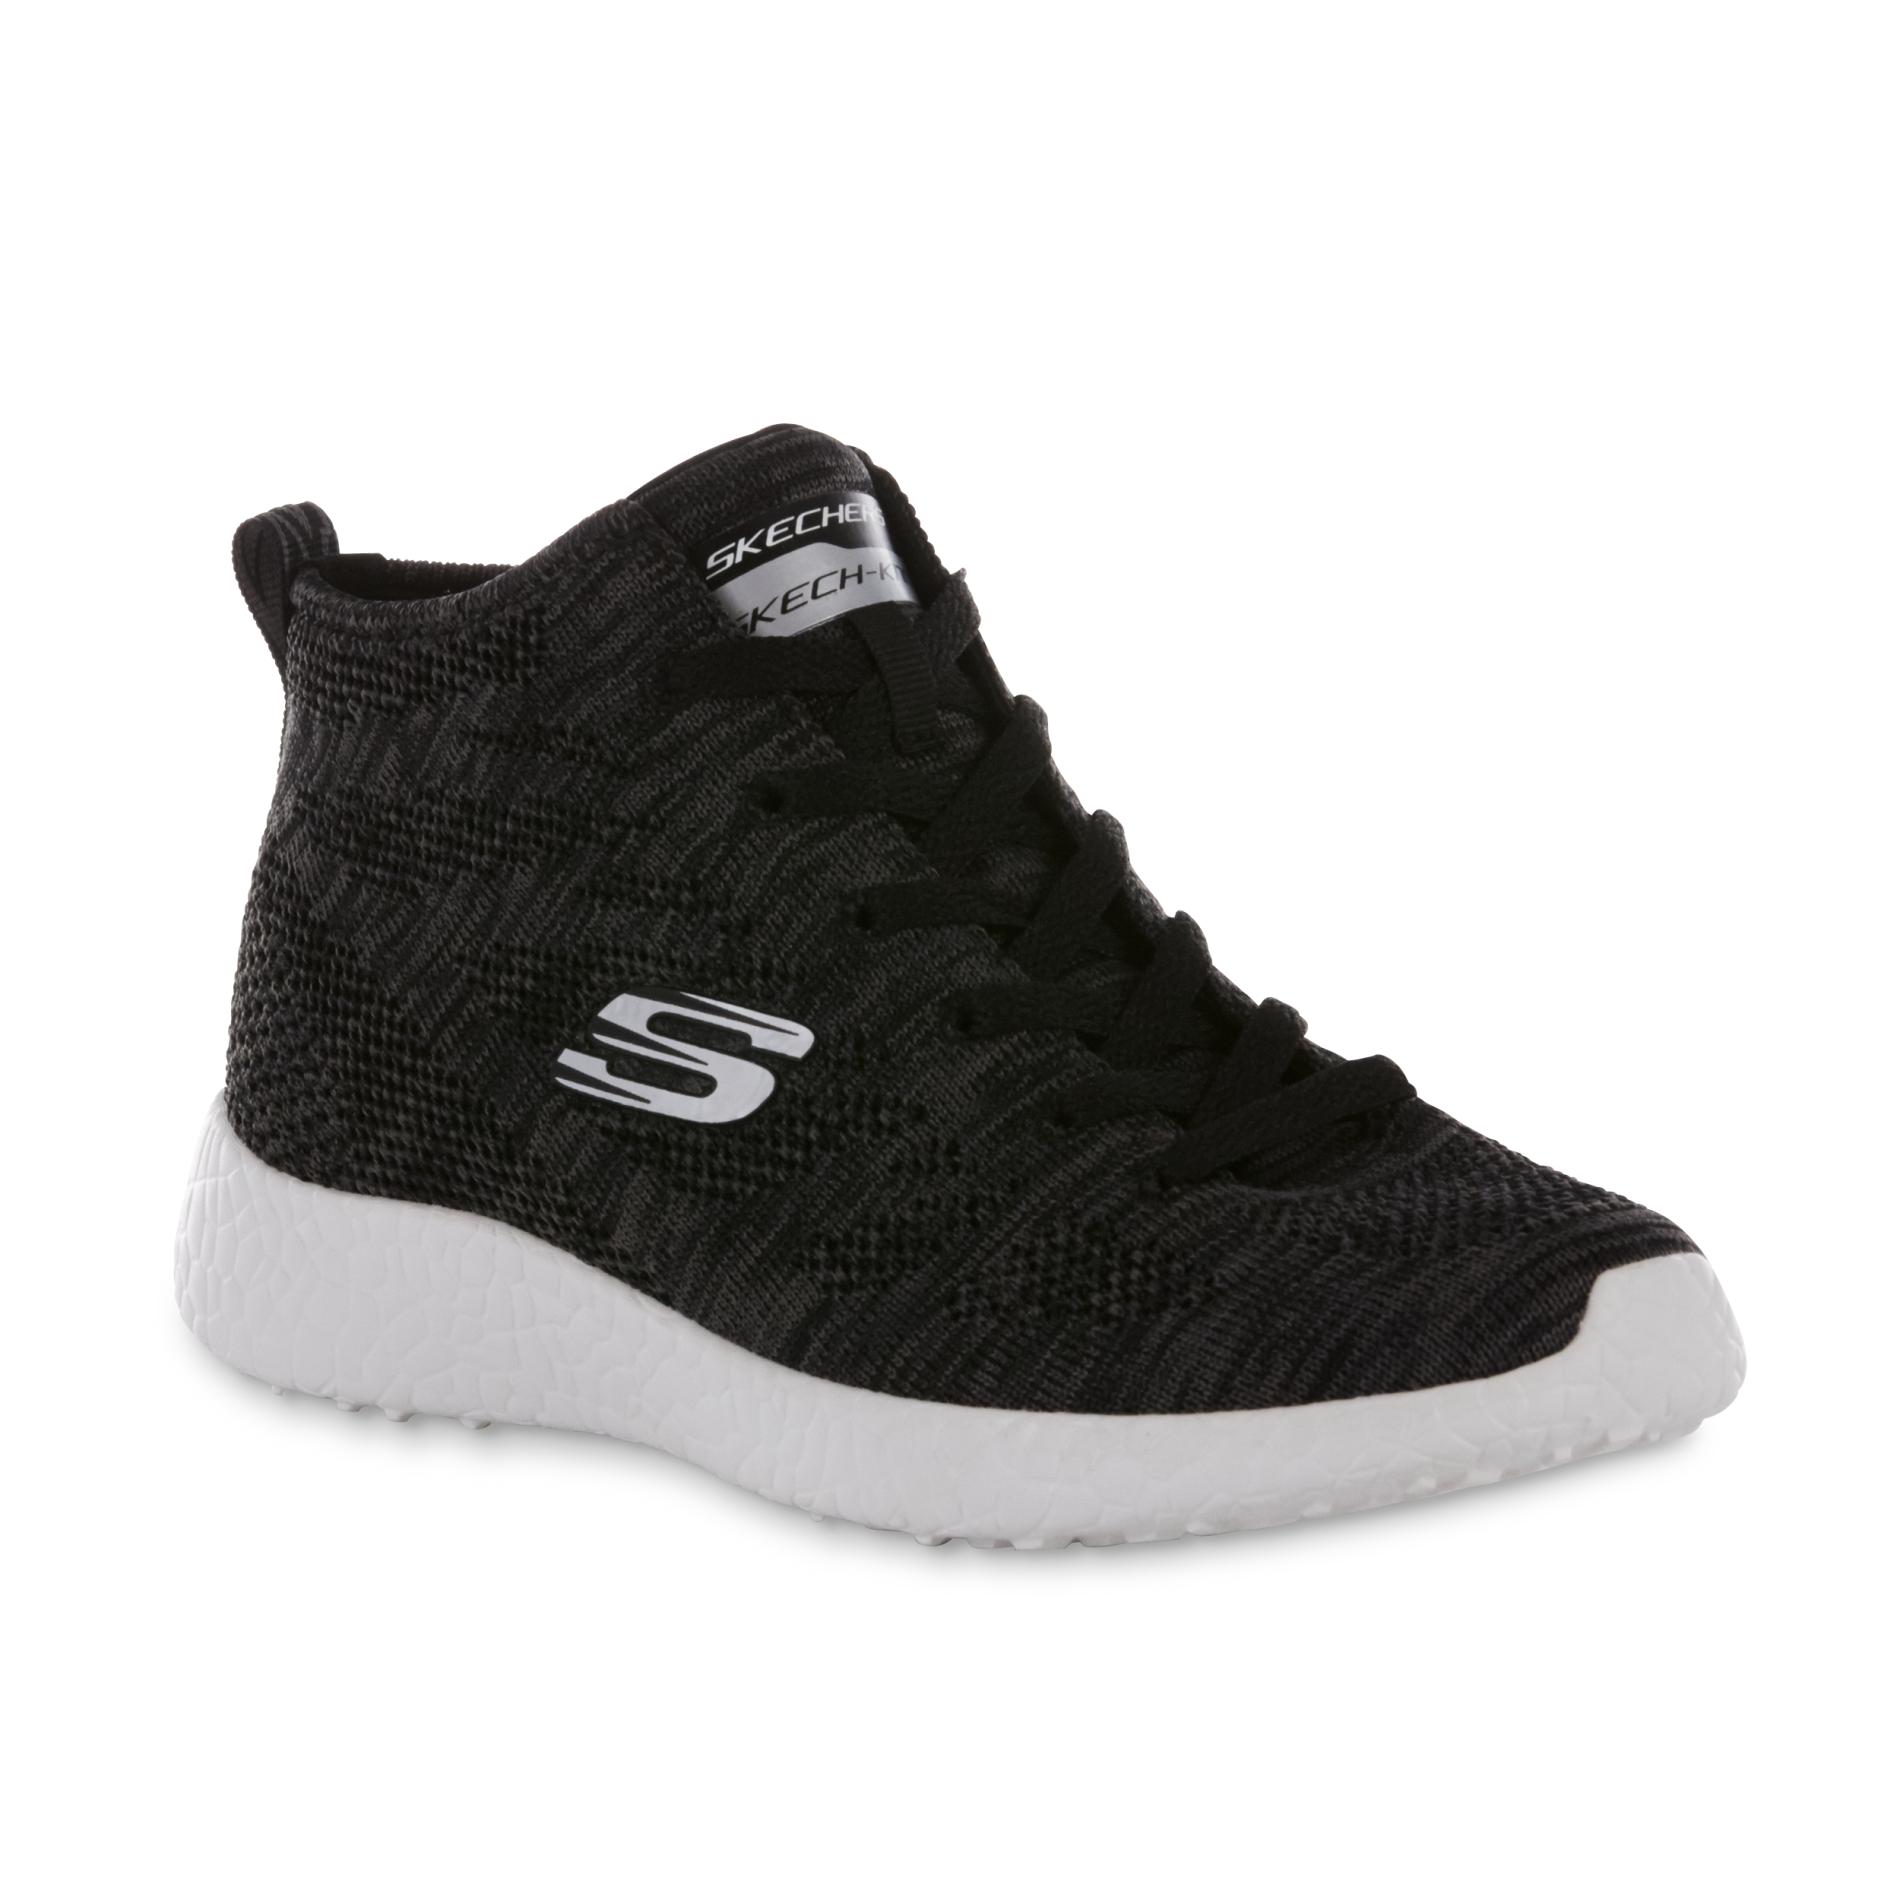 Skechers Women's Divergent Black/Space-Dyed Athletic Shoe